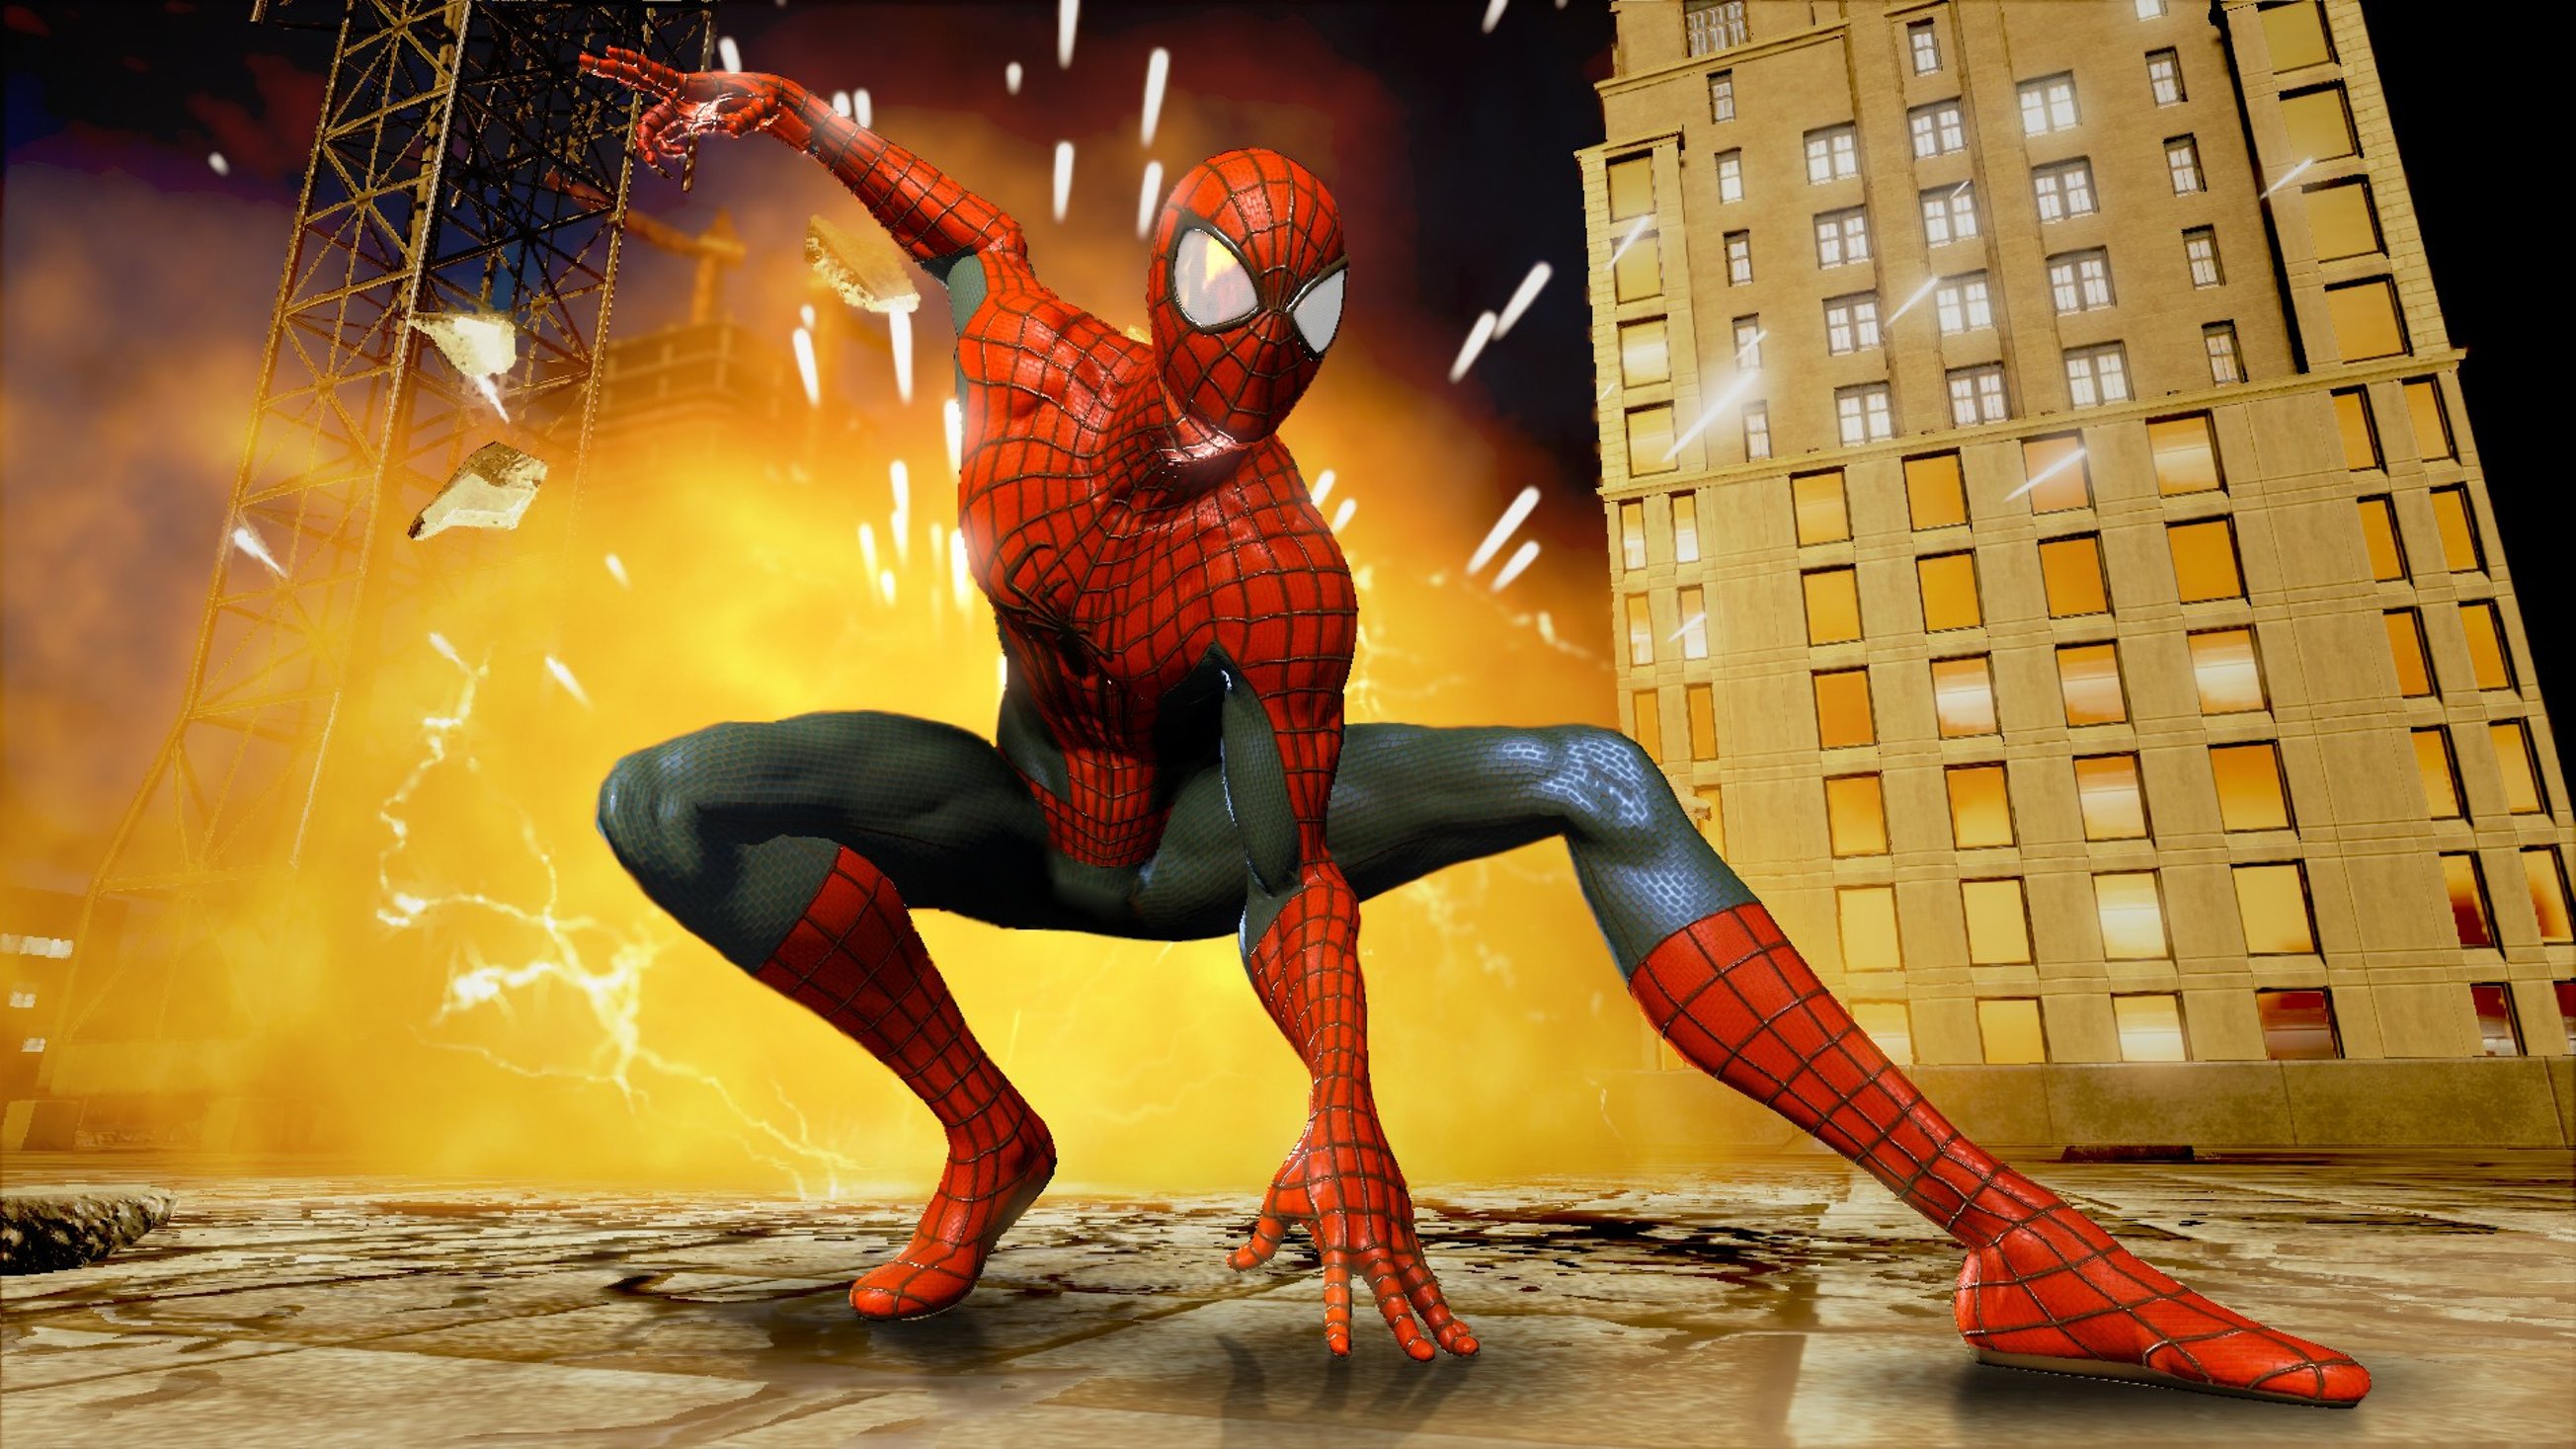 Скачайте настоящего человека паука. Spider-man 2. Амазинг Спайдер Мэн 2. The amazing Spider-man игра 2014. The amazing Spider-man 2 (игра, 2014).